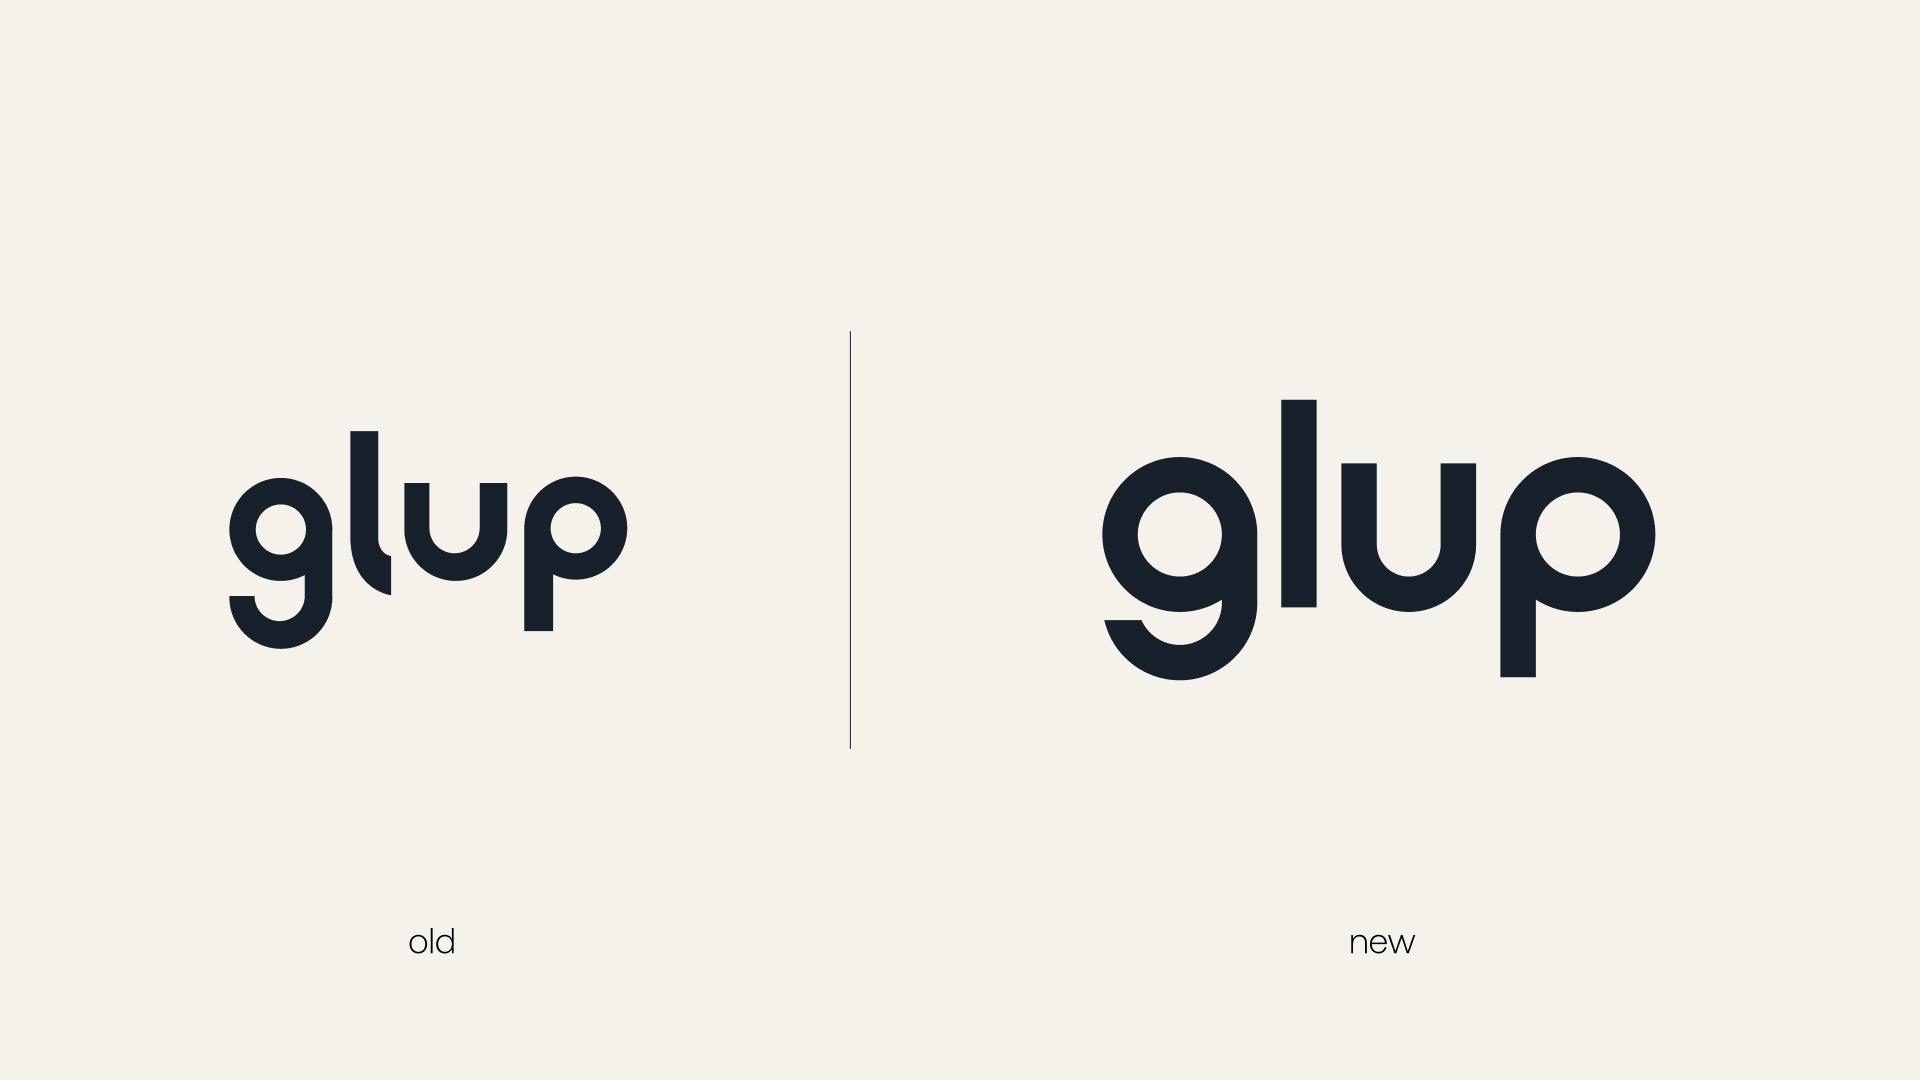 old vs new glup app case study